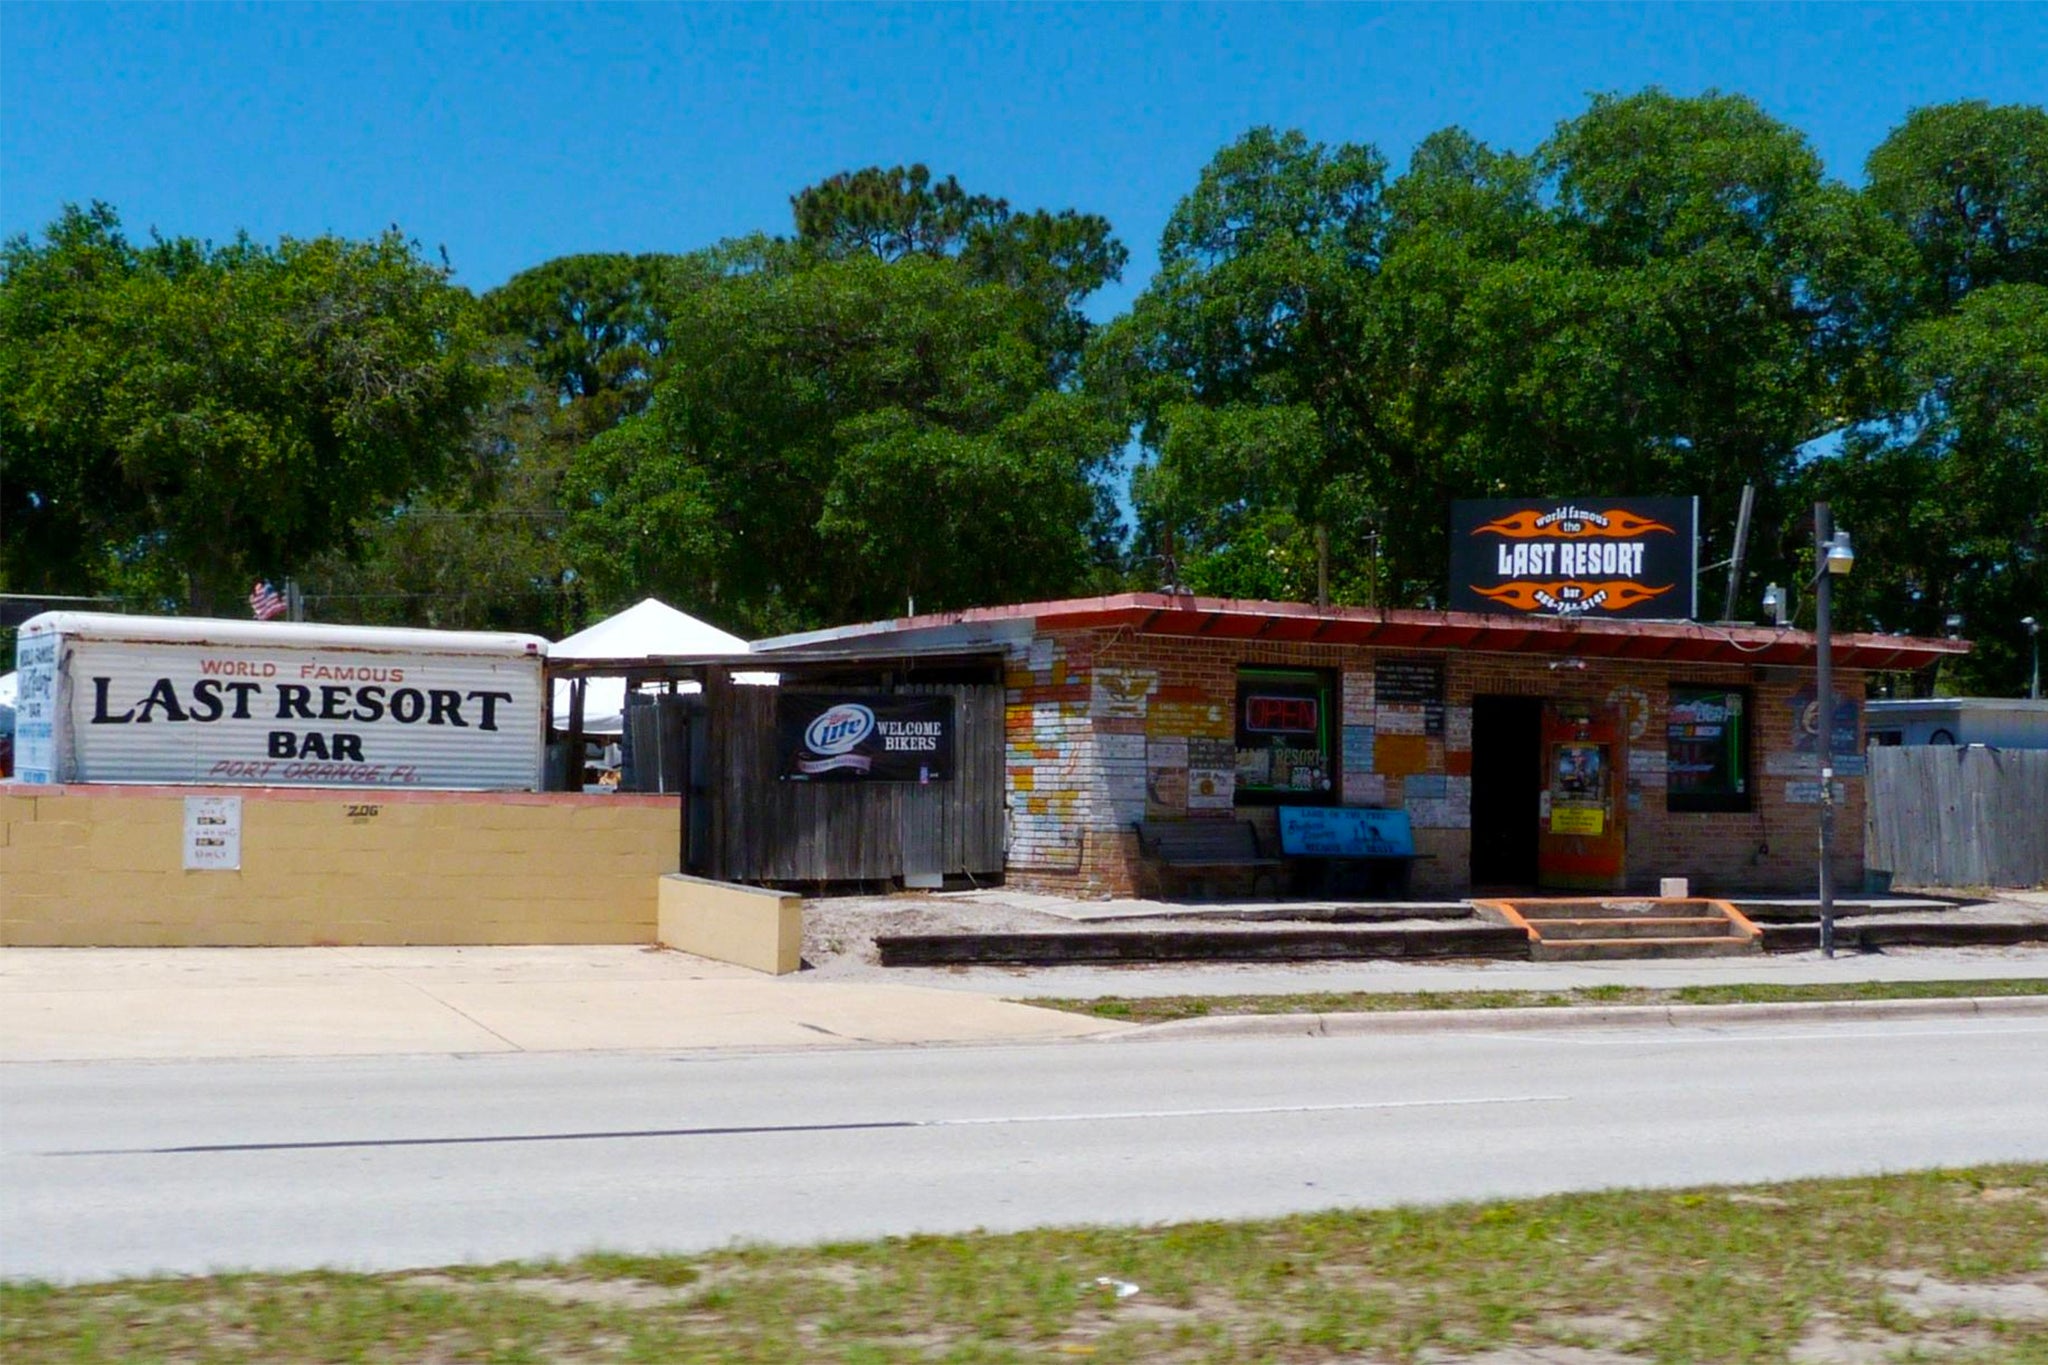 The Last Resort biker bar in Port Orange, Florida, where Aileen Wuornos was arrested in 1991